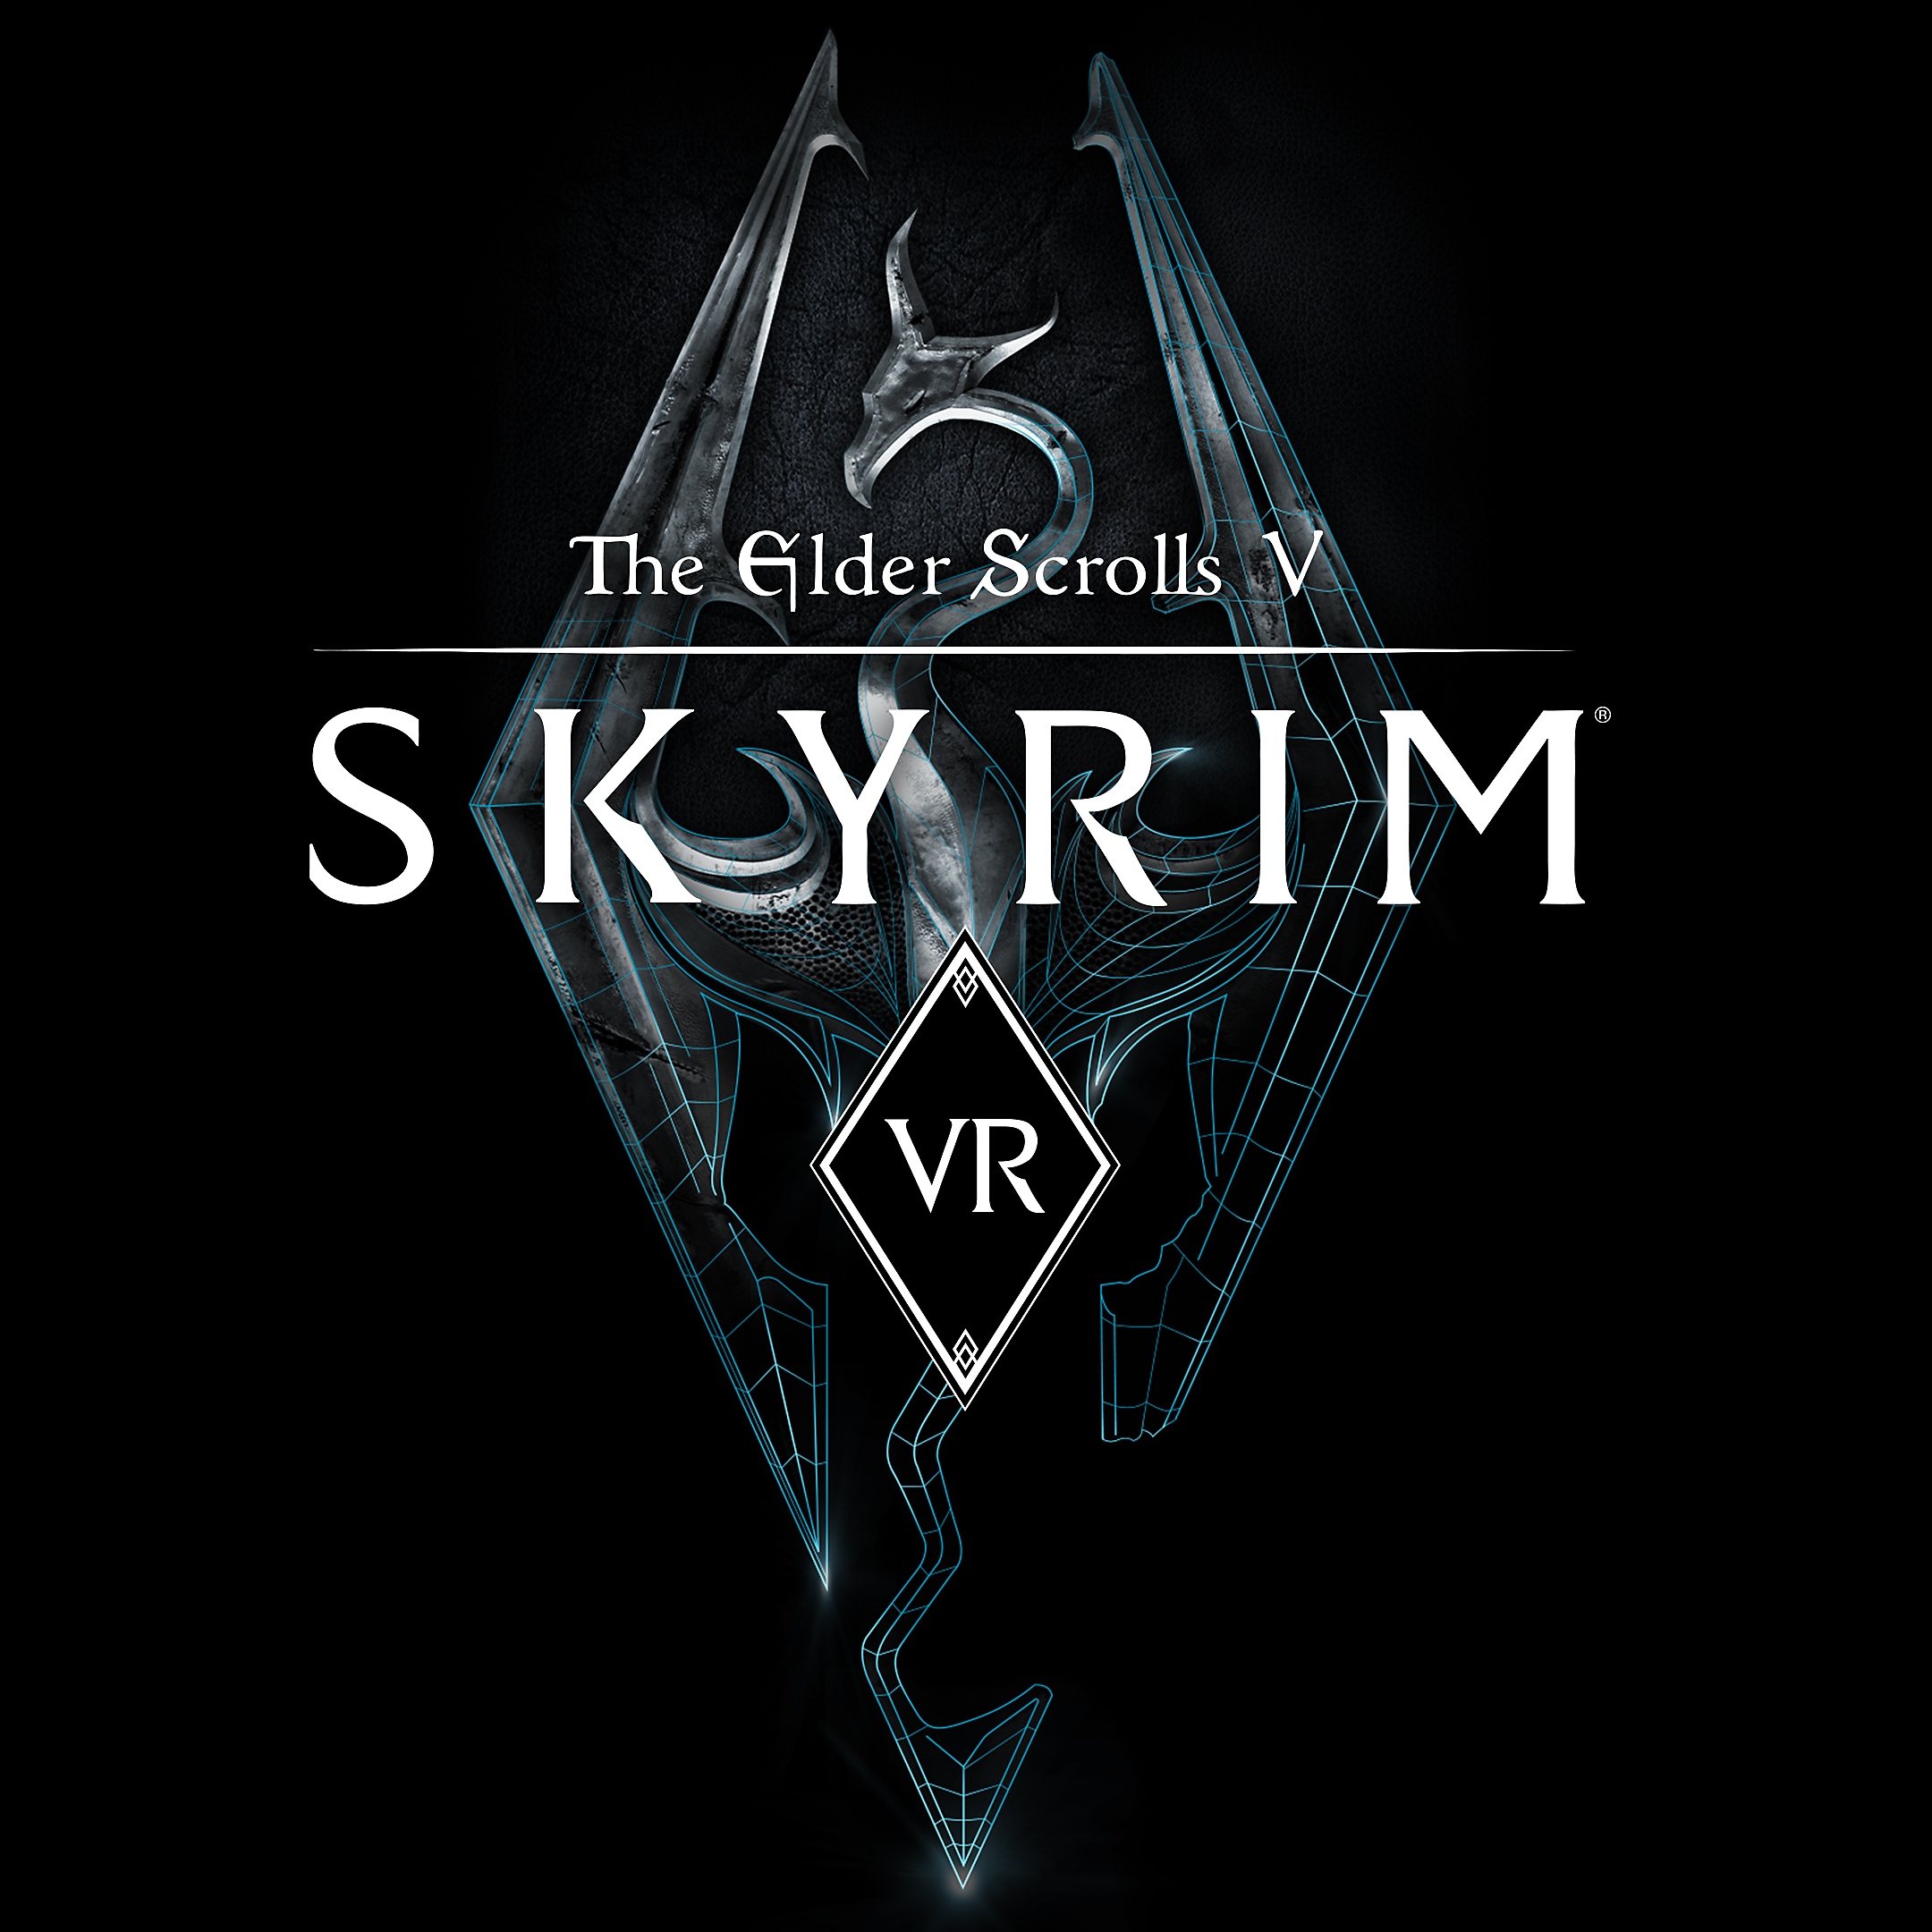 The Elder Scrolls V: Foto del paquete de Skyrim VR